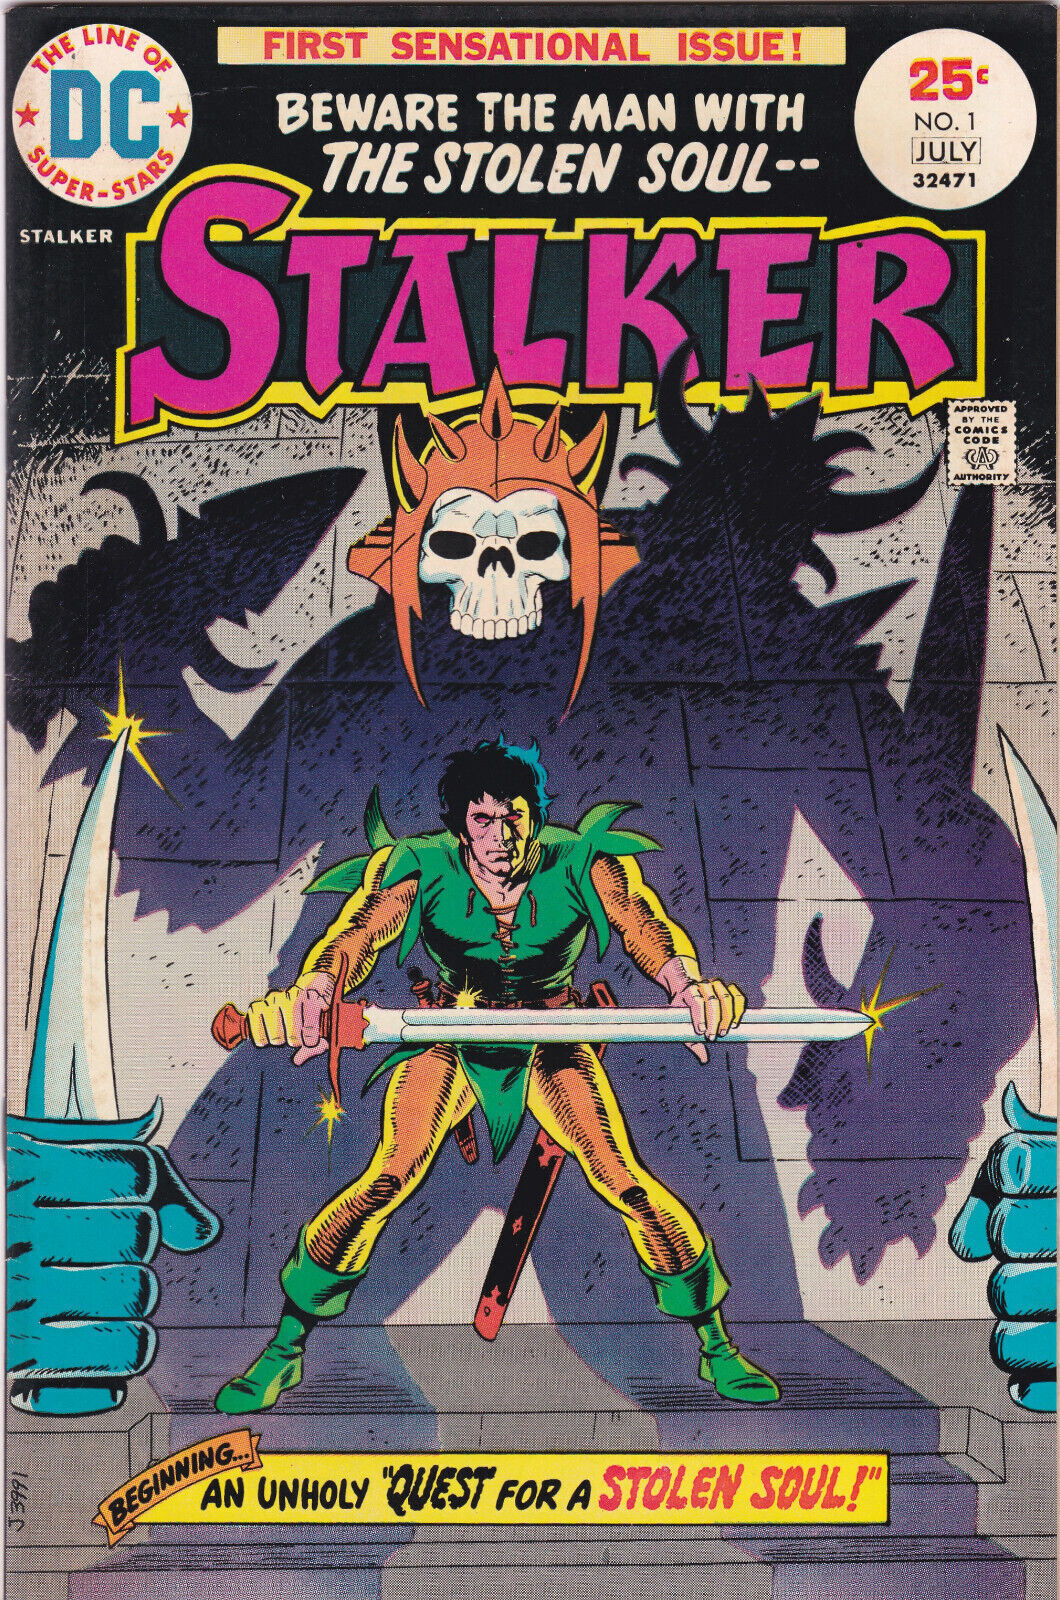 Stalker #1, DC Comics 1975, Steve Ditko / Wally Wood Art, High Grade